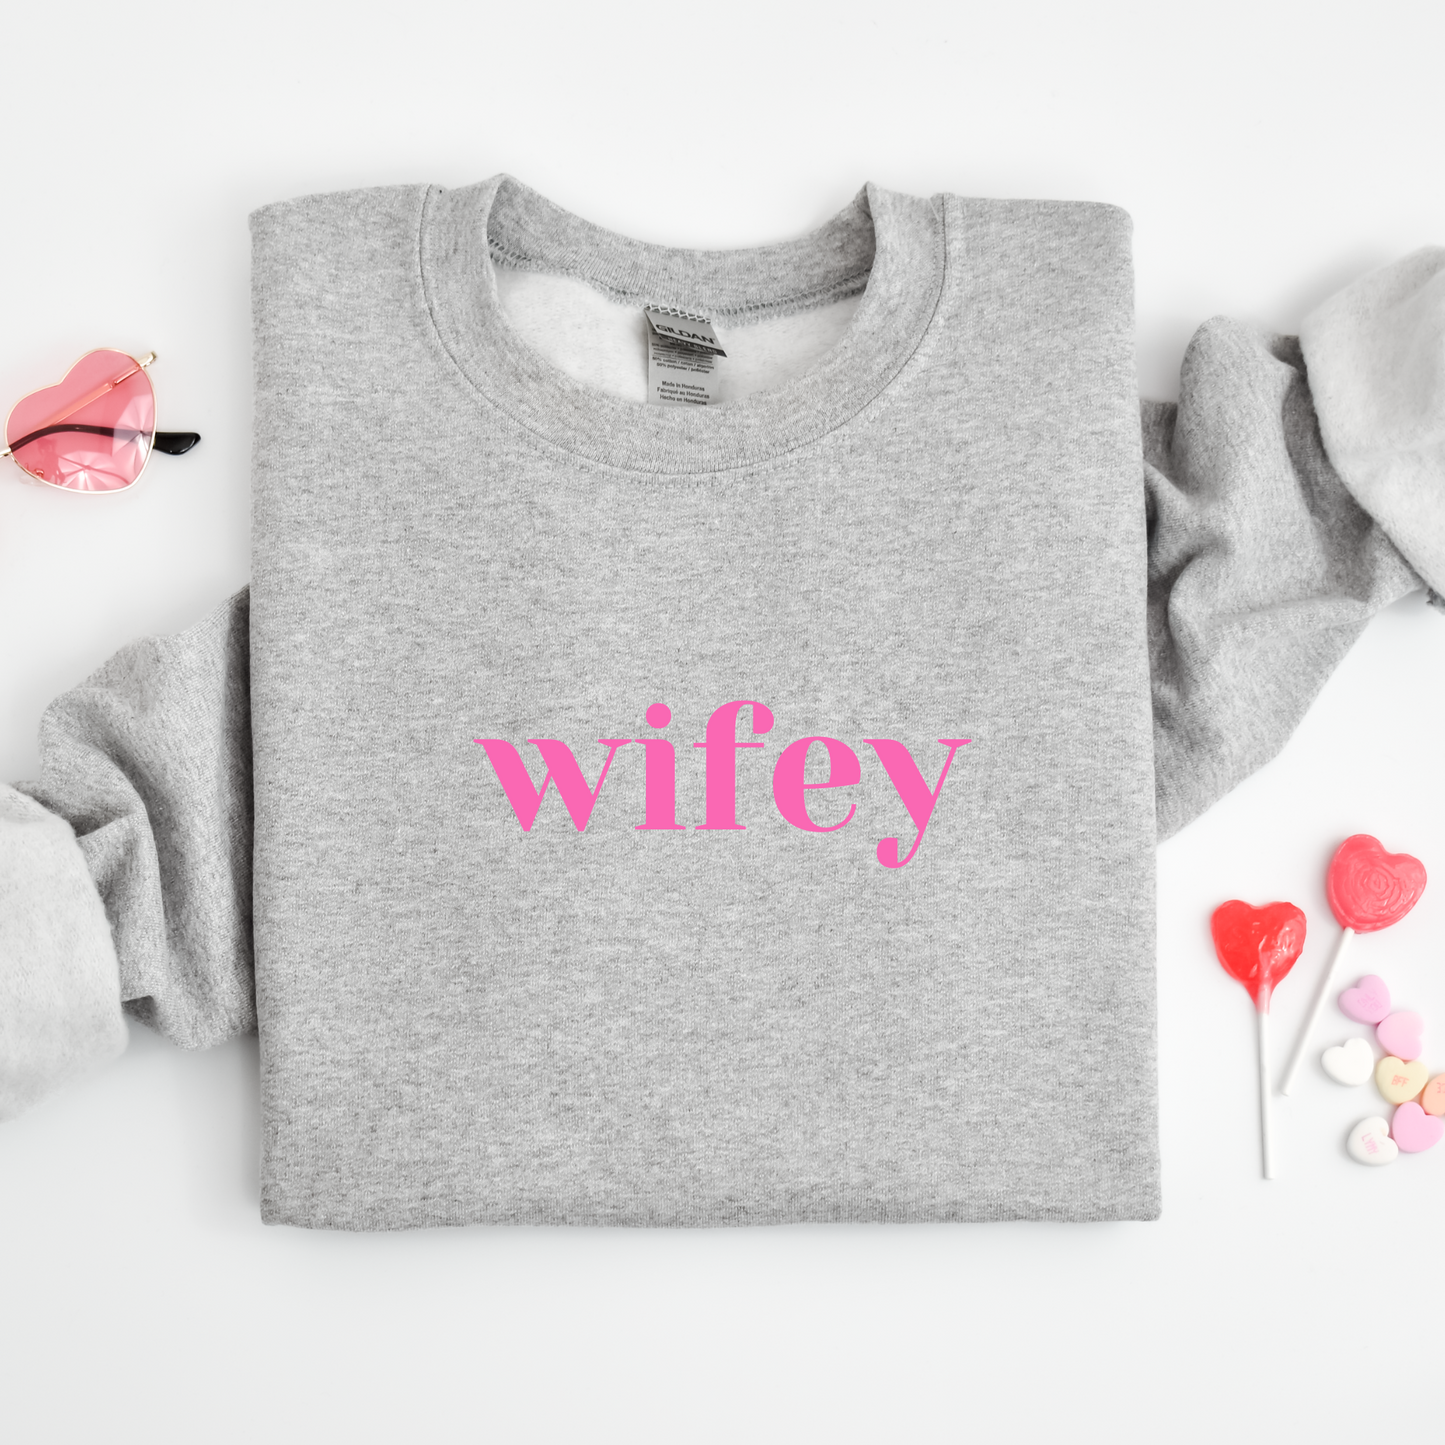 Wifey Crew Neck Graphic Sweater